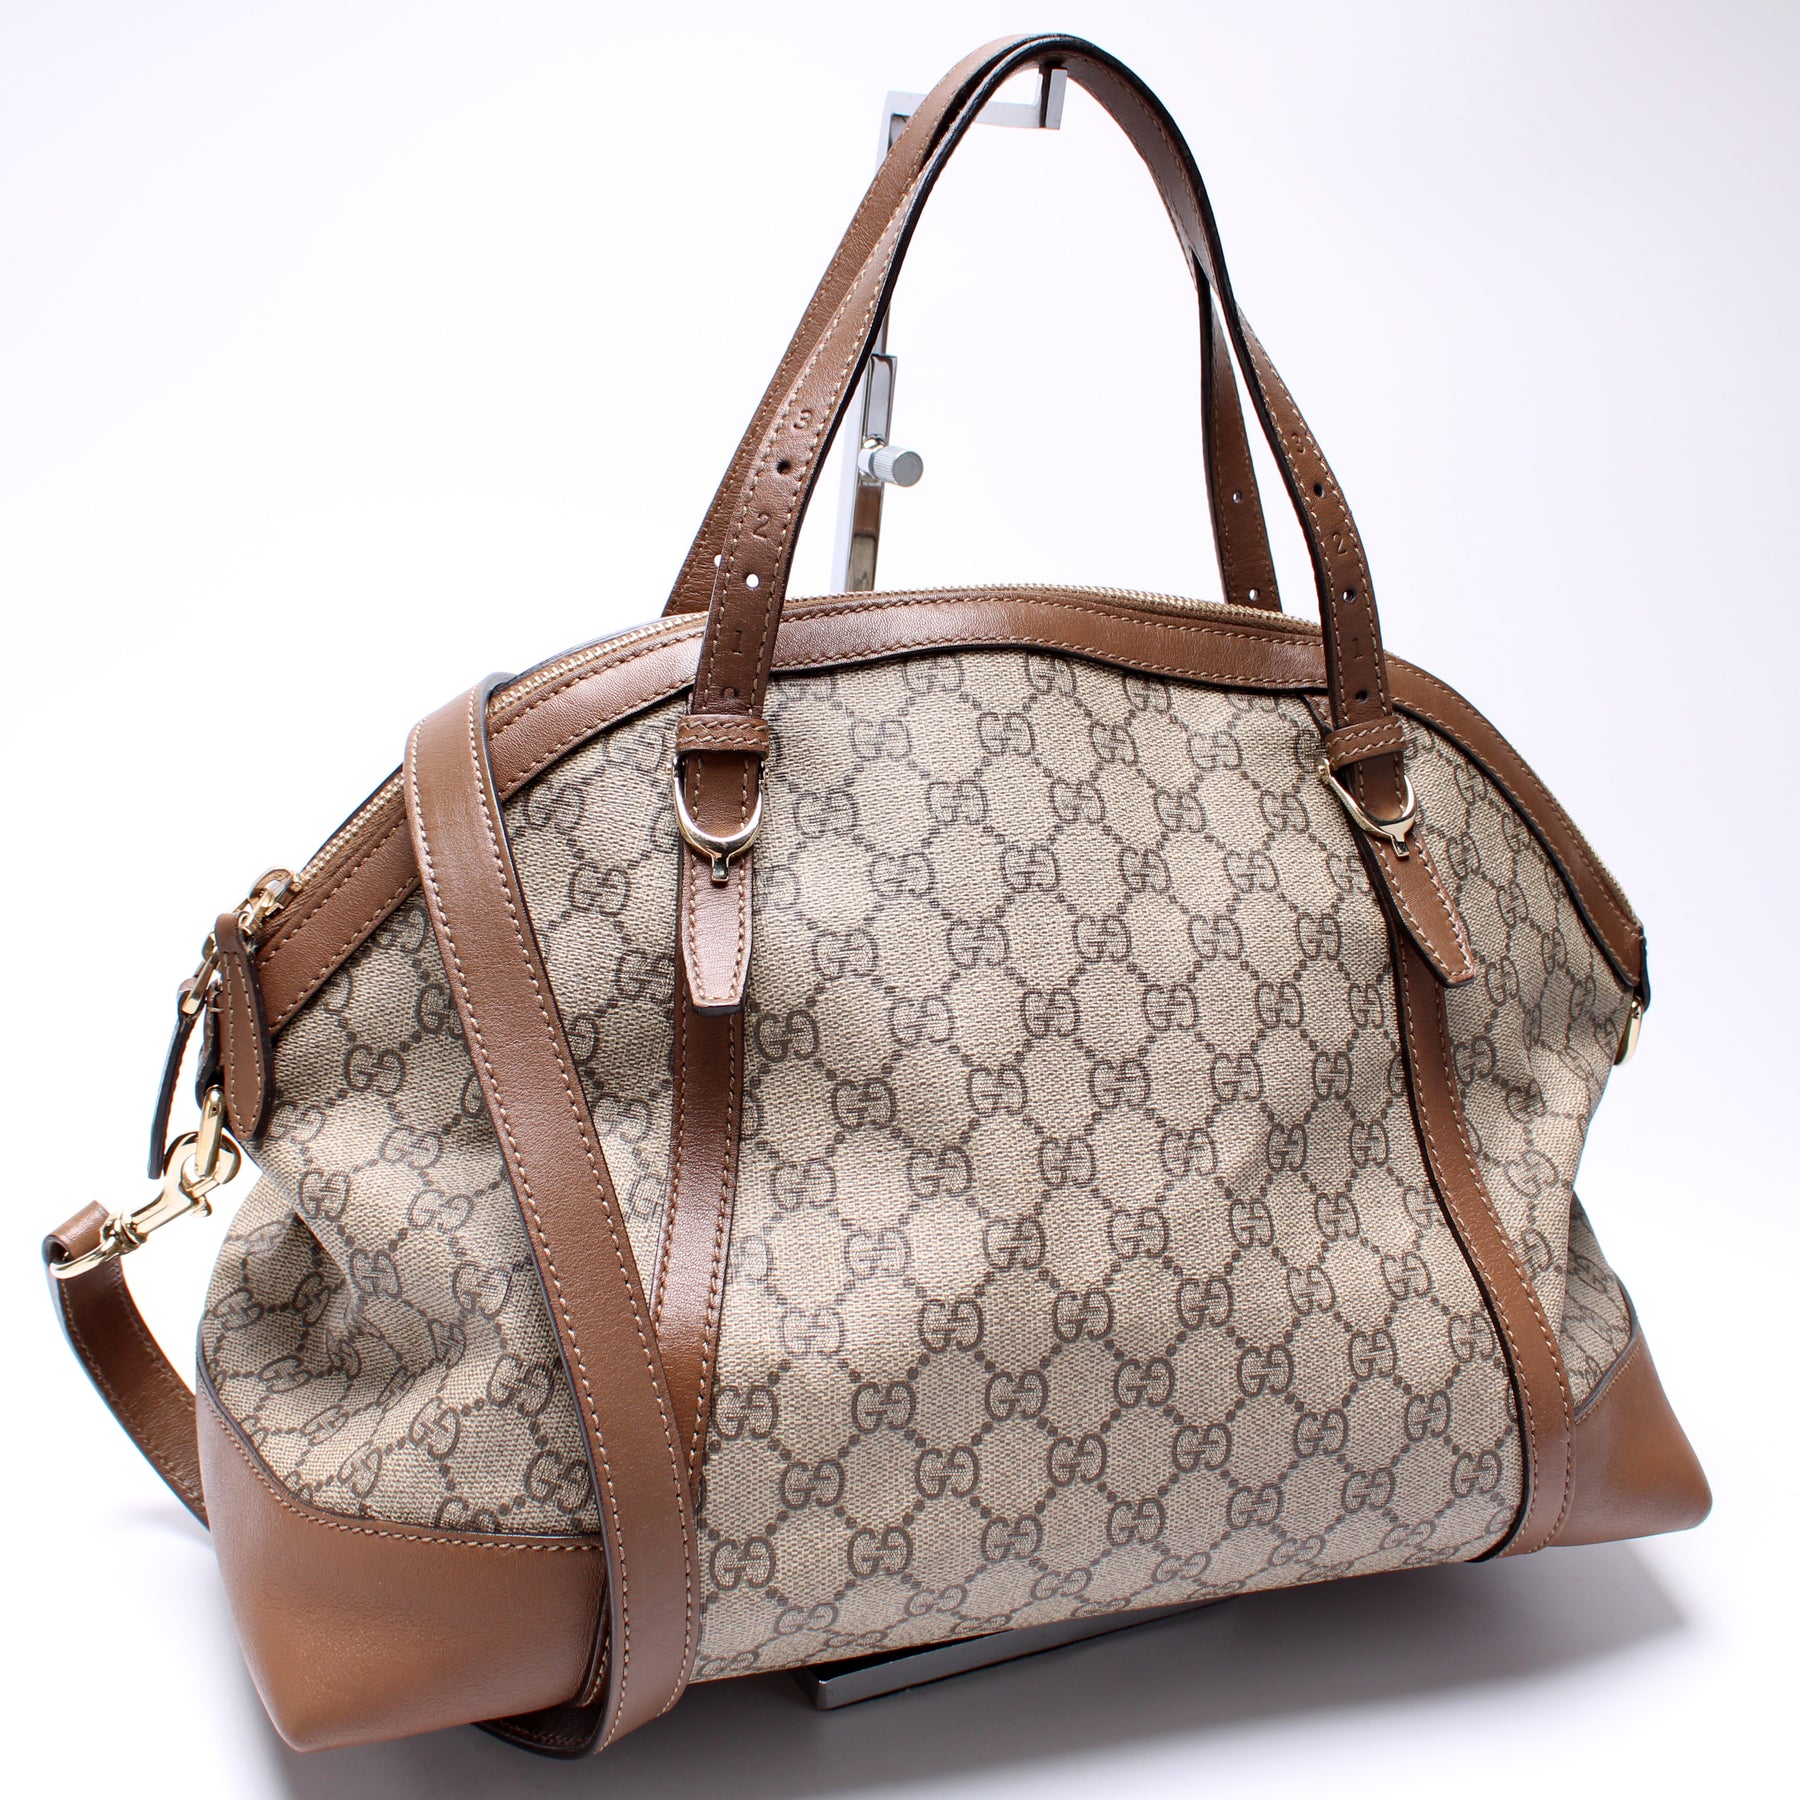 PRADA Saffiano Leather Promenade Handbag Dome Satchel Cream/Beige